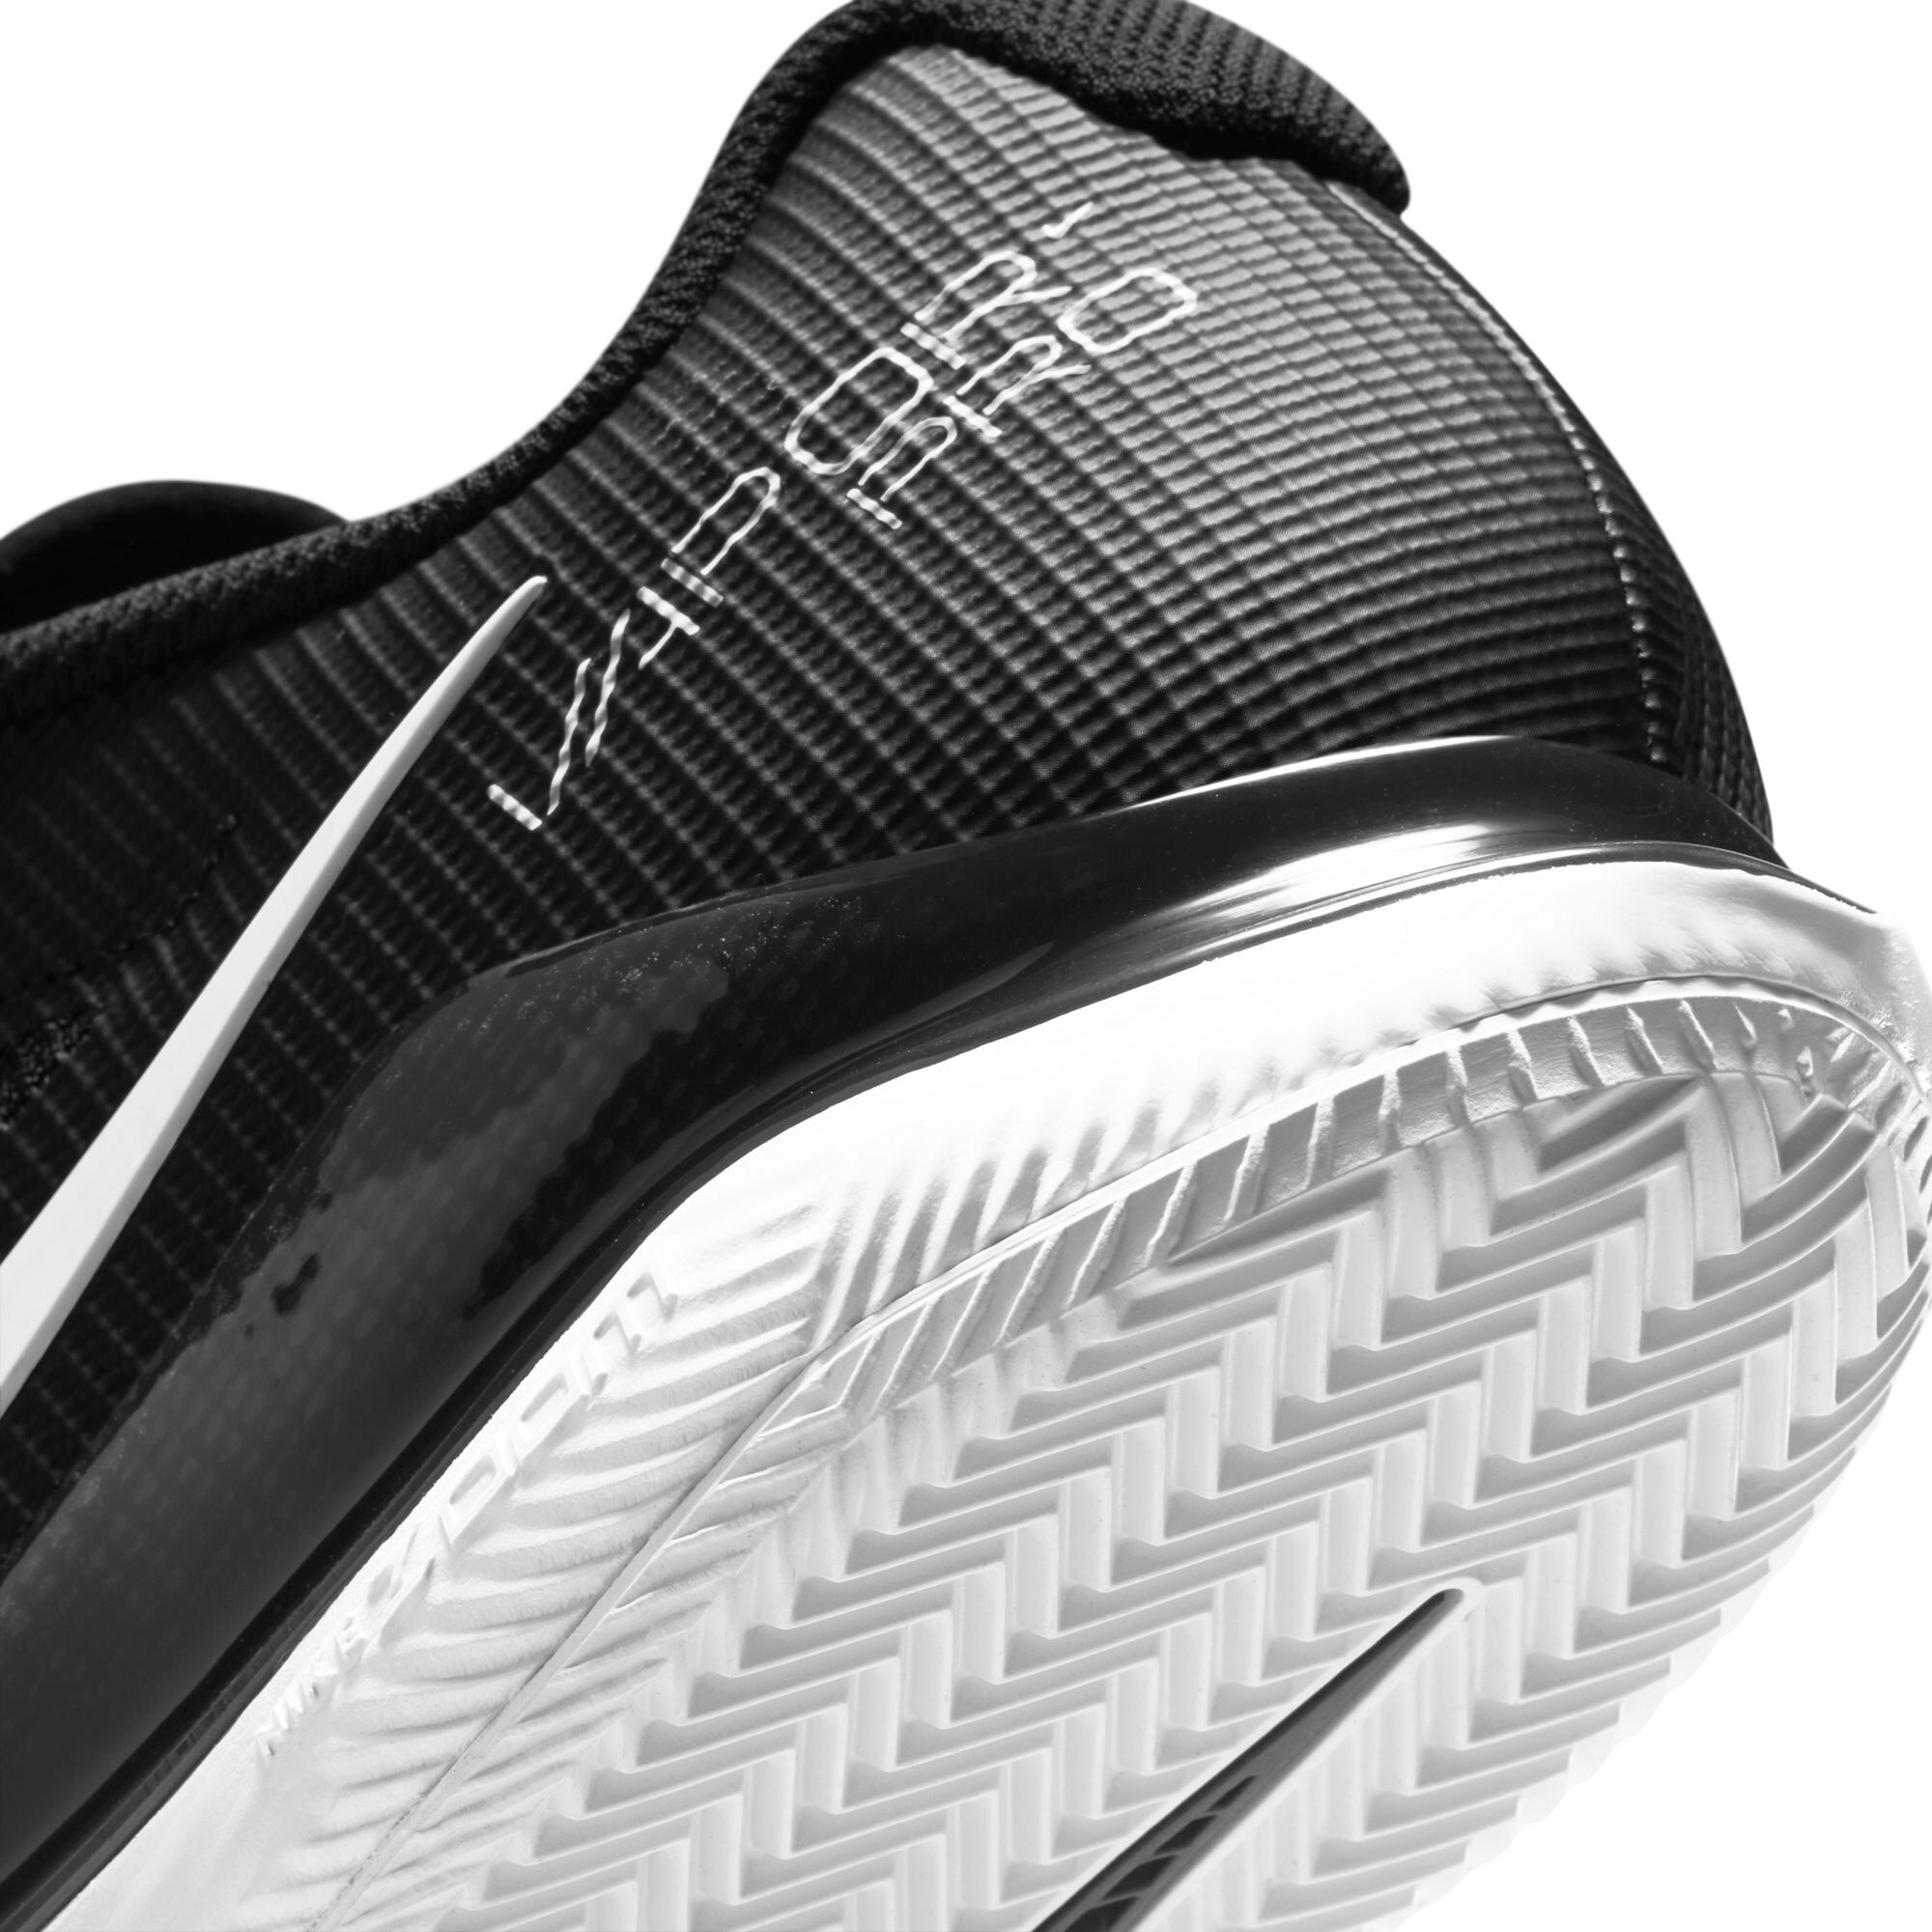 habilitar Actual Asistencia Nike Court Air Zoom Vapor Pro Clay Court Shoe Men - Black, White online |  Padel-Point